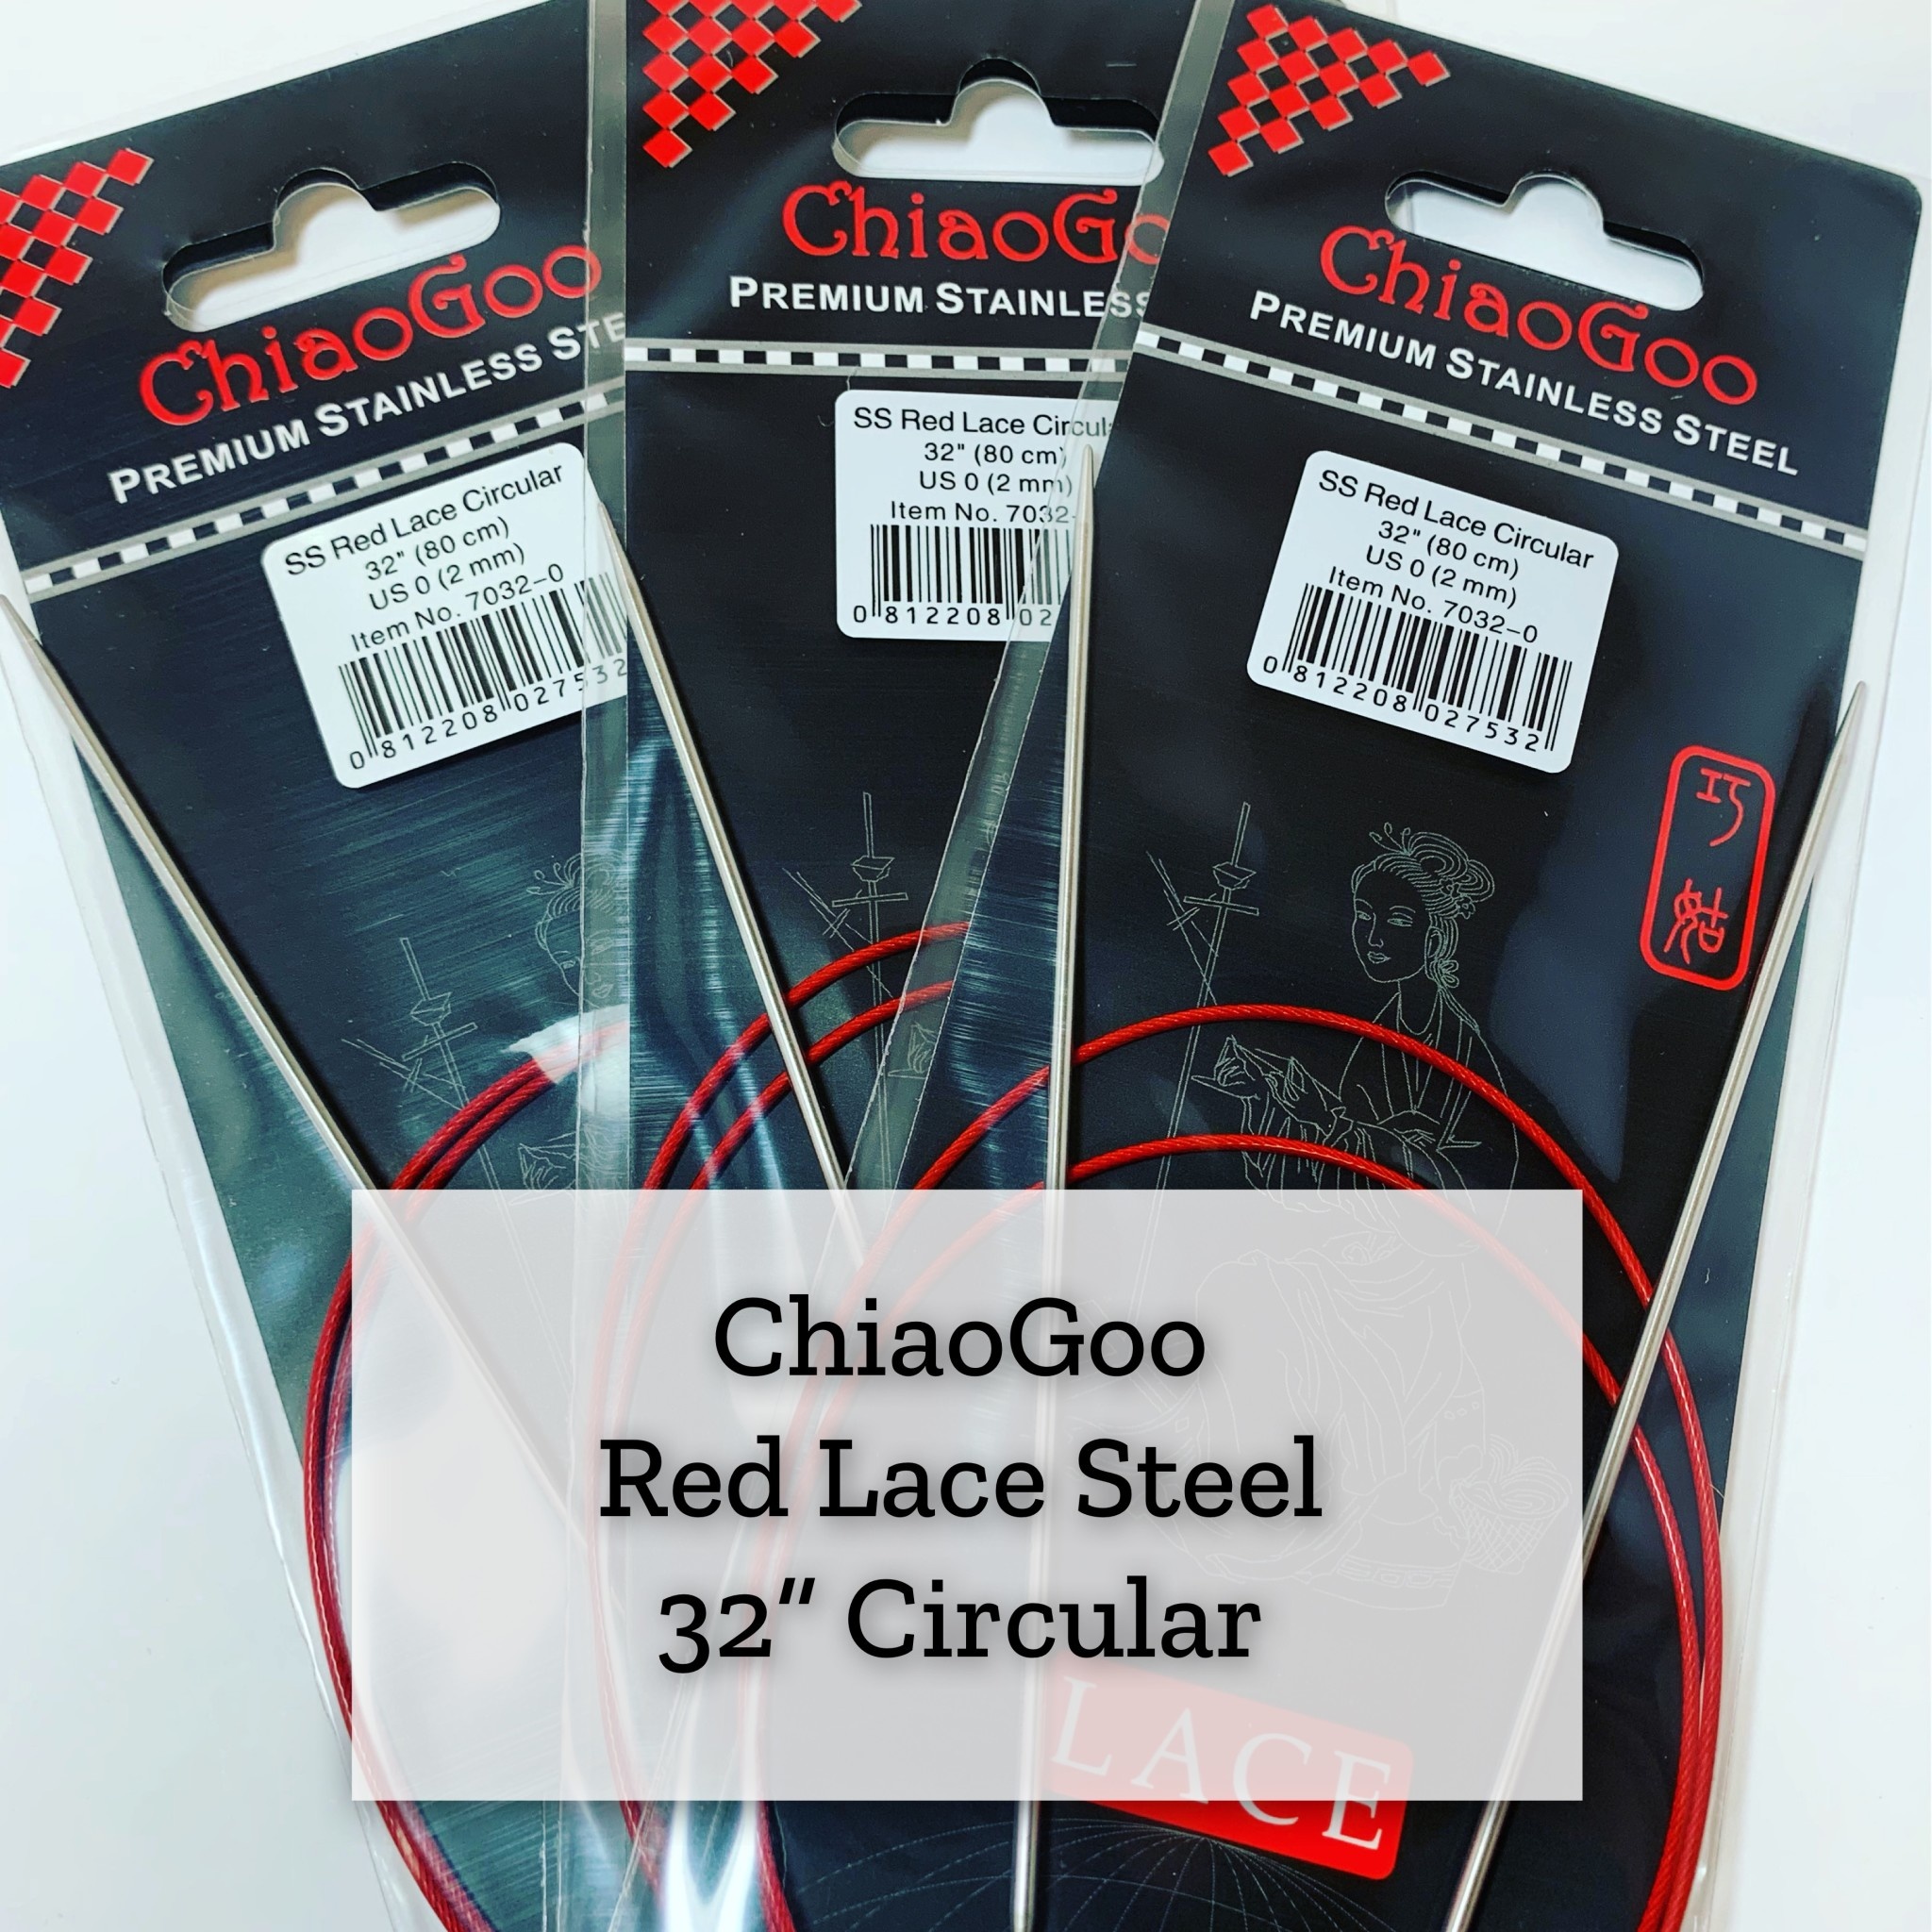 ChiaoGoo Red Lace Steel - 32" 3.75 mm